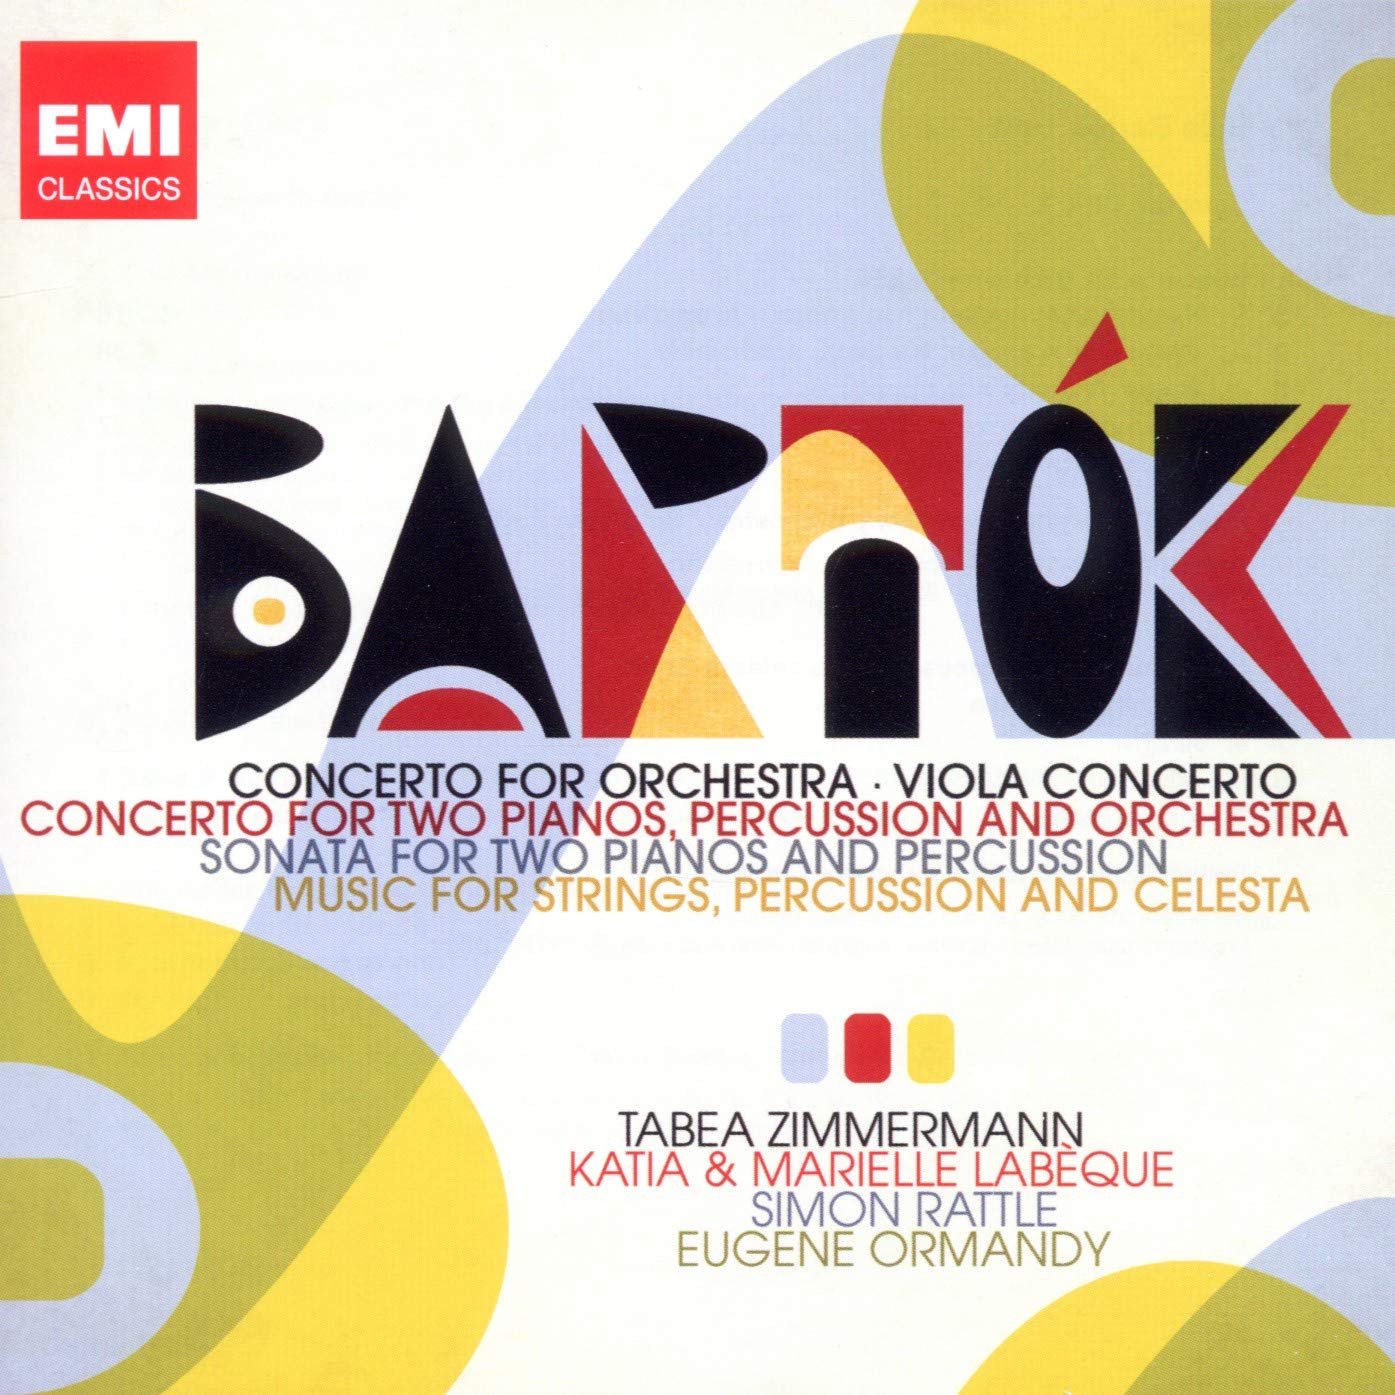 Bartok- Concerto For Orchestra (Eugene Ormandy, Conductor) - Darkside Records